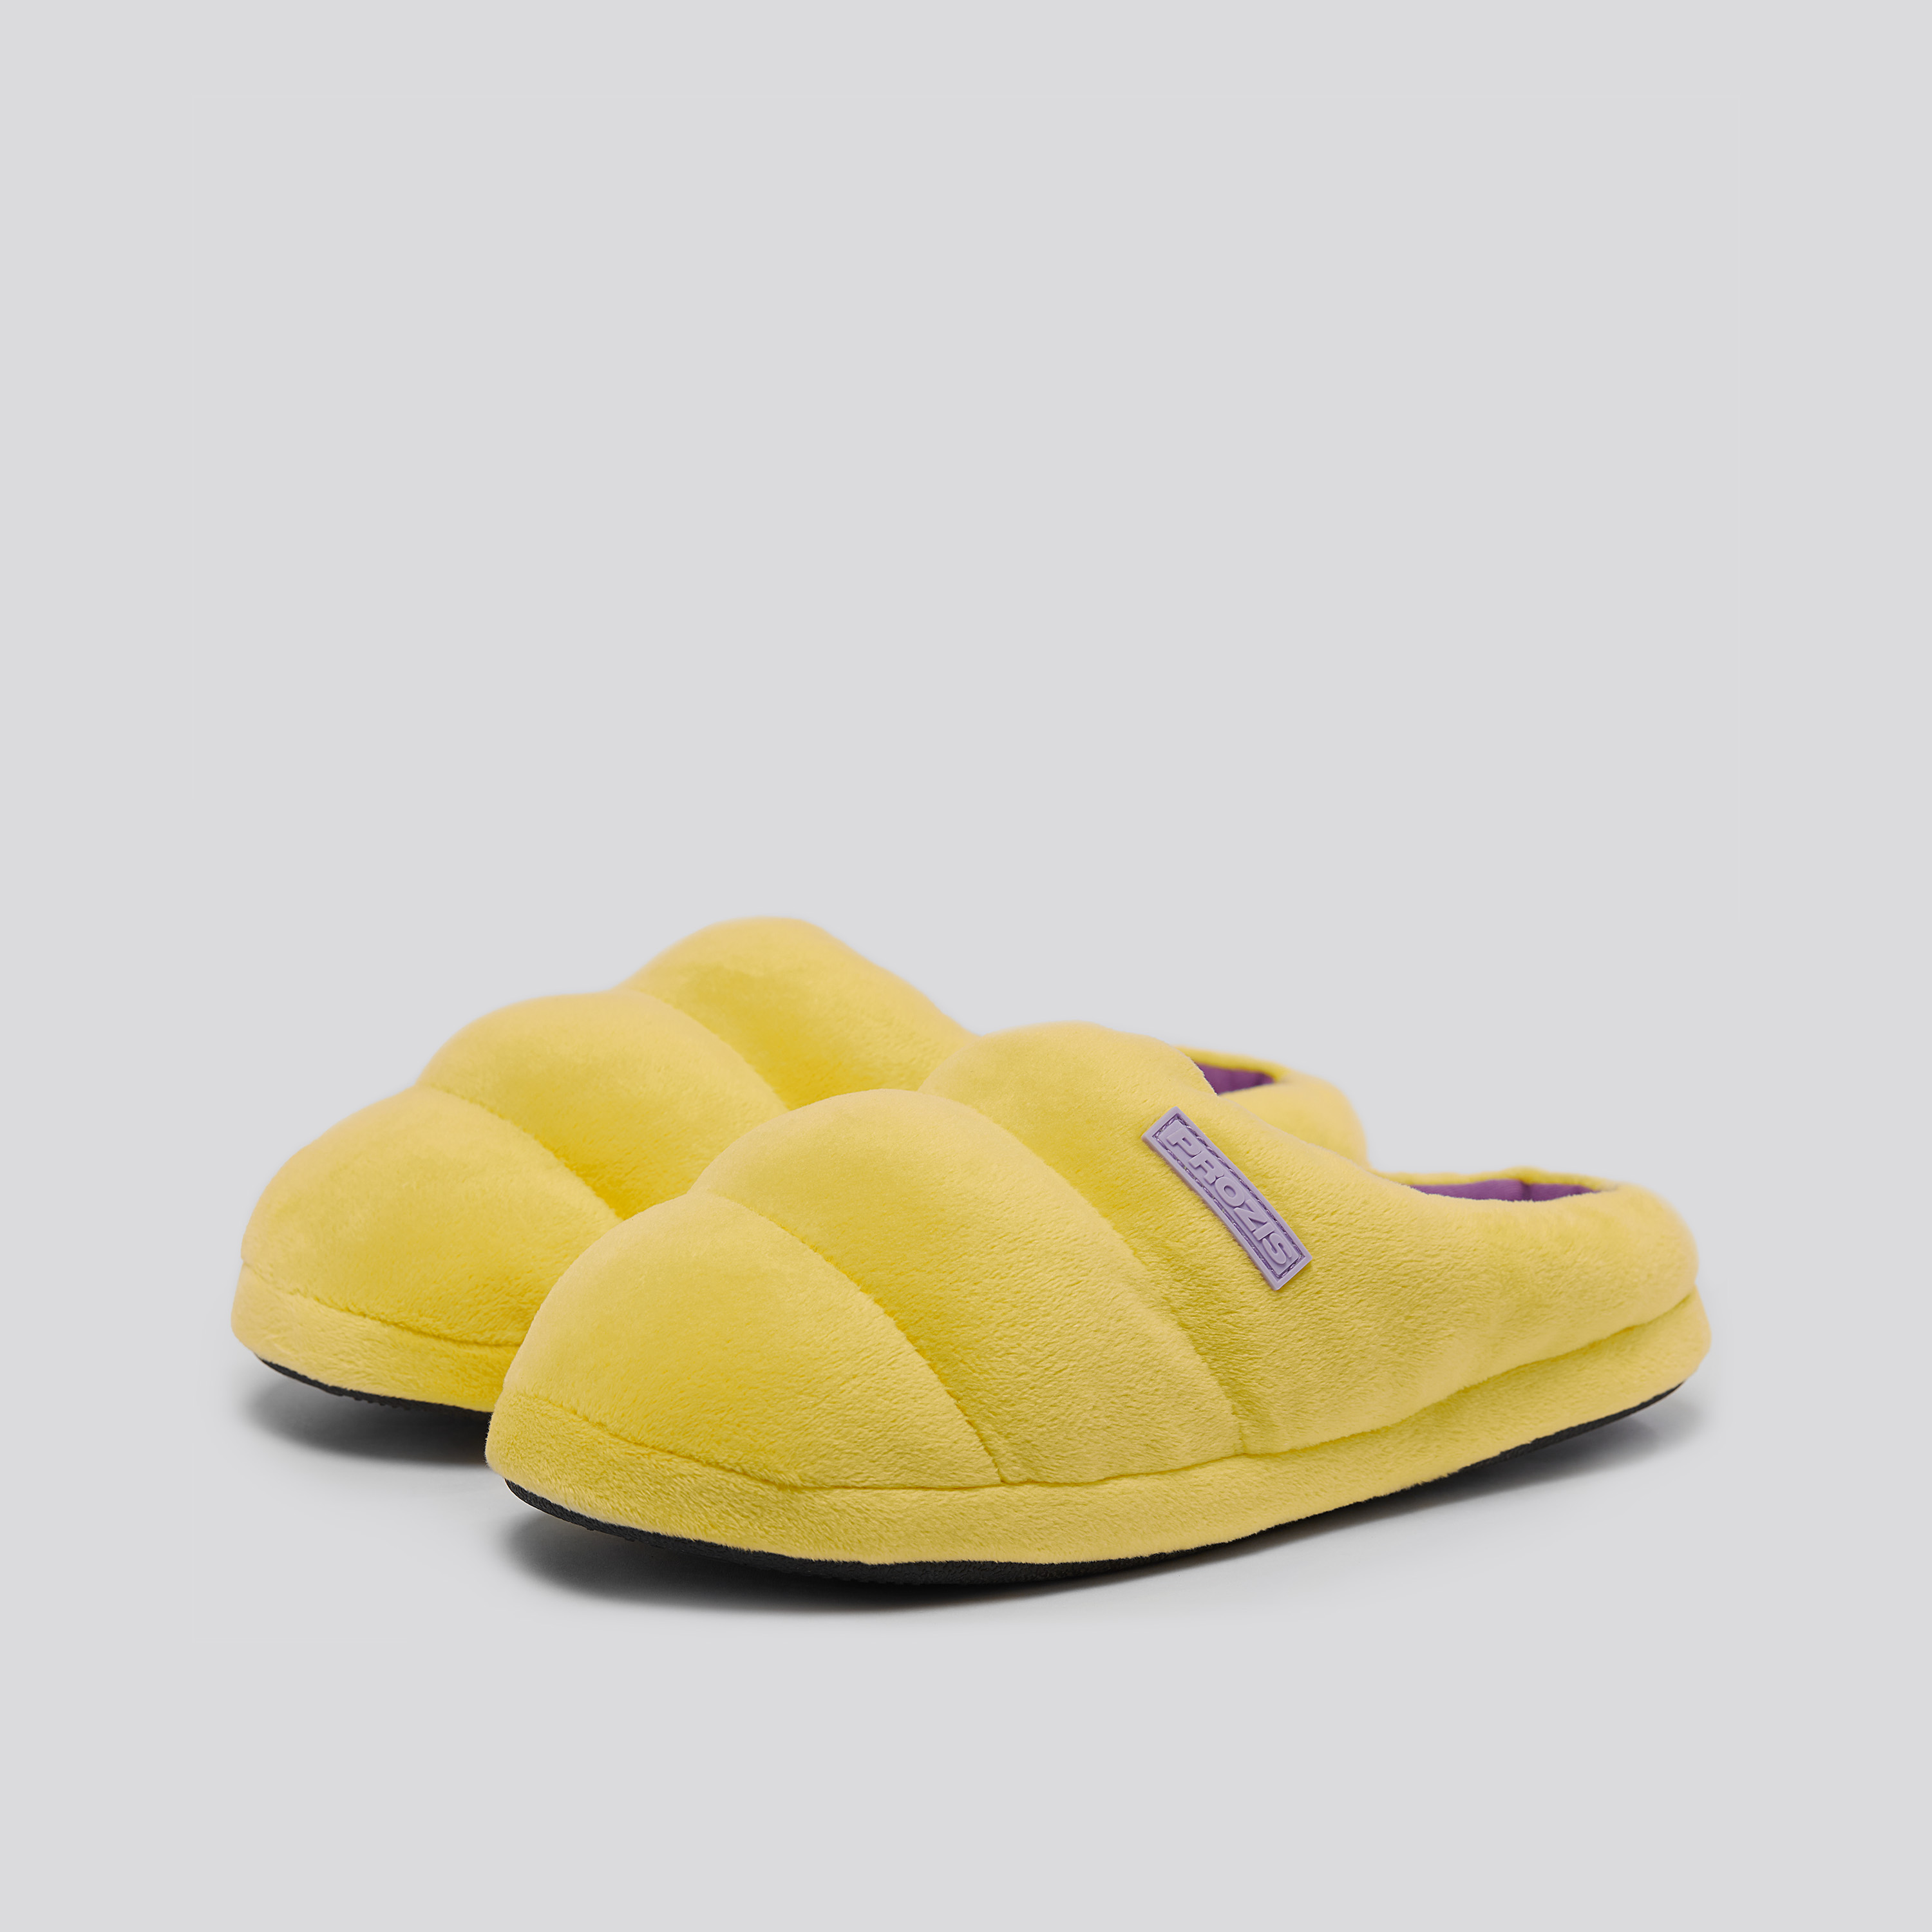 Jomo Slippers - Velvet Yellow - 鞋类 